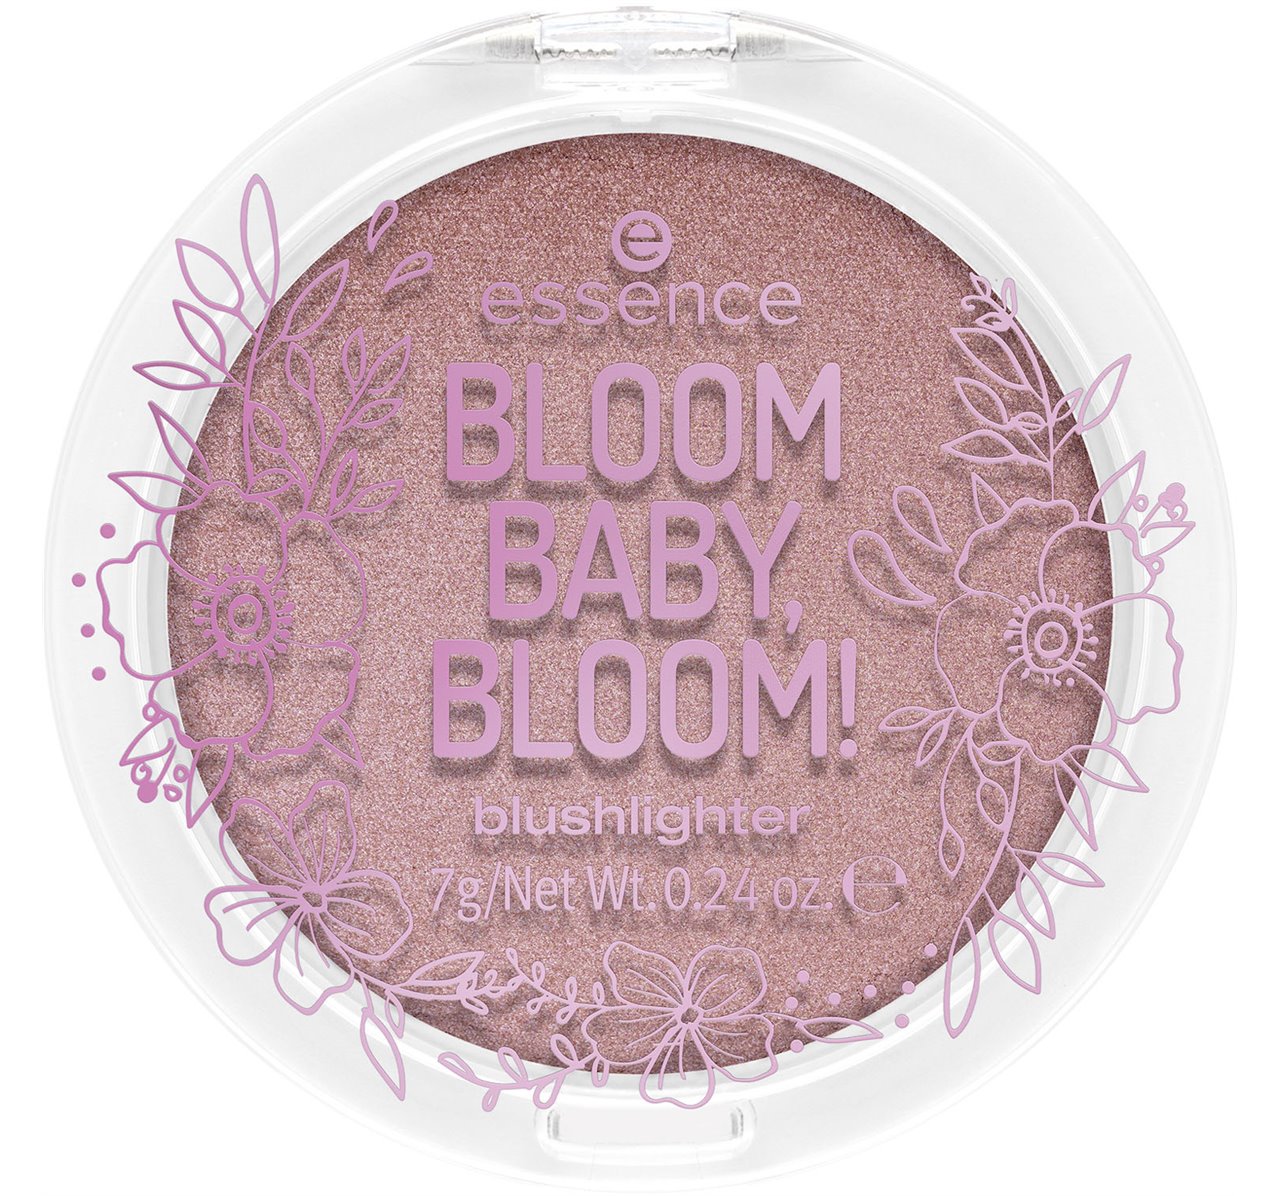 essence BLOOM BABY, BLOOM! blushlighter 01 I Lilac You! 7g